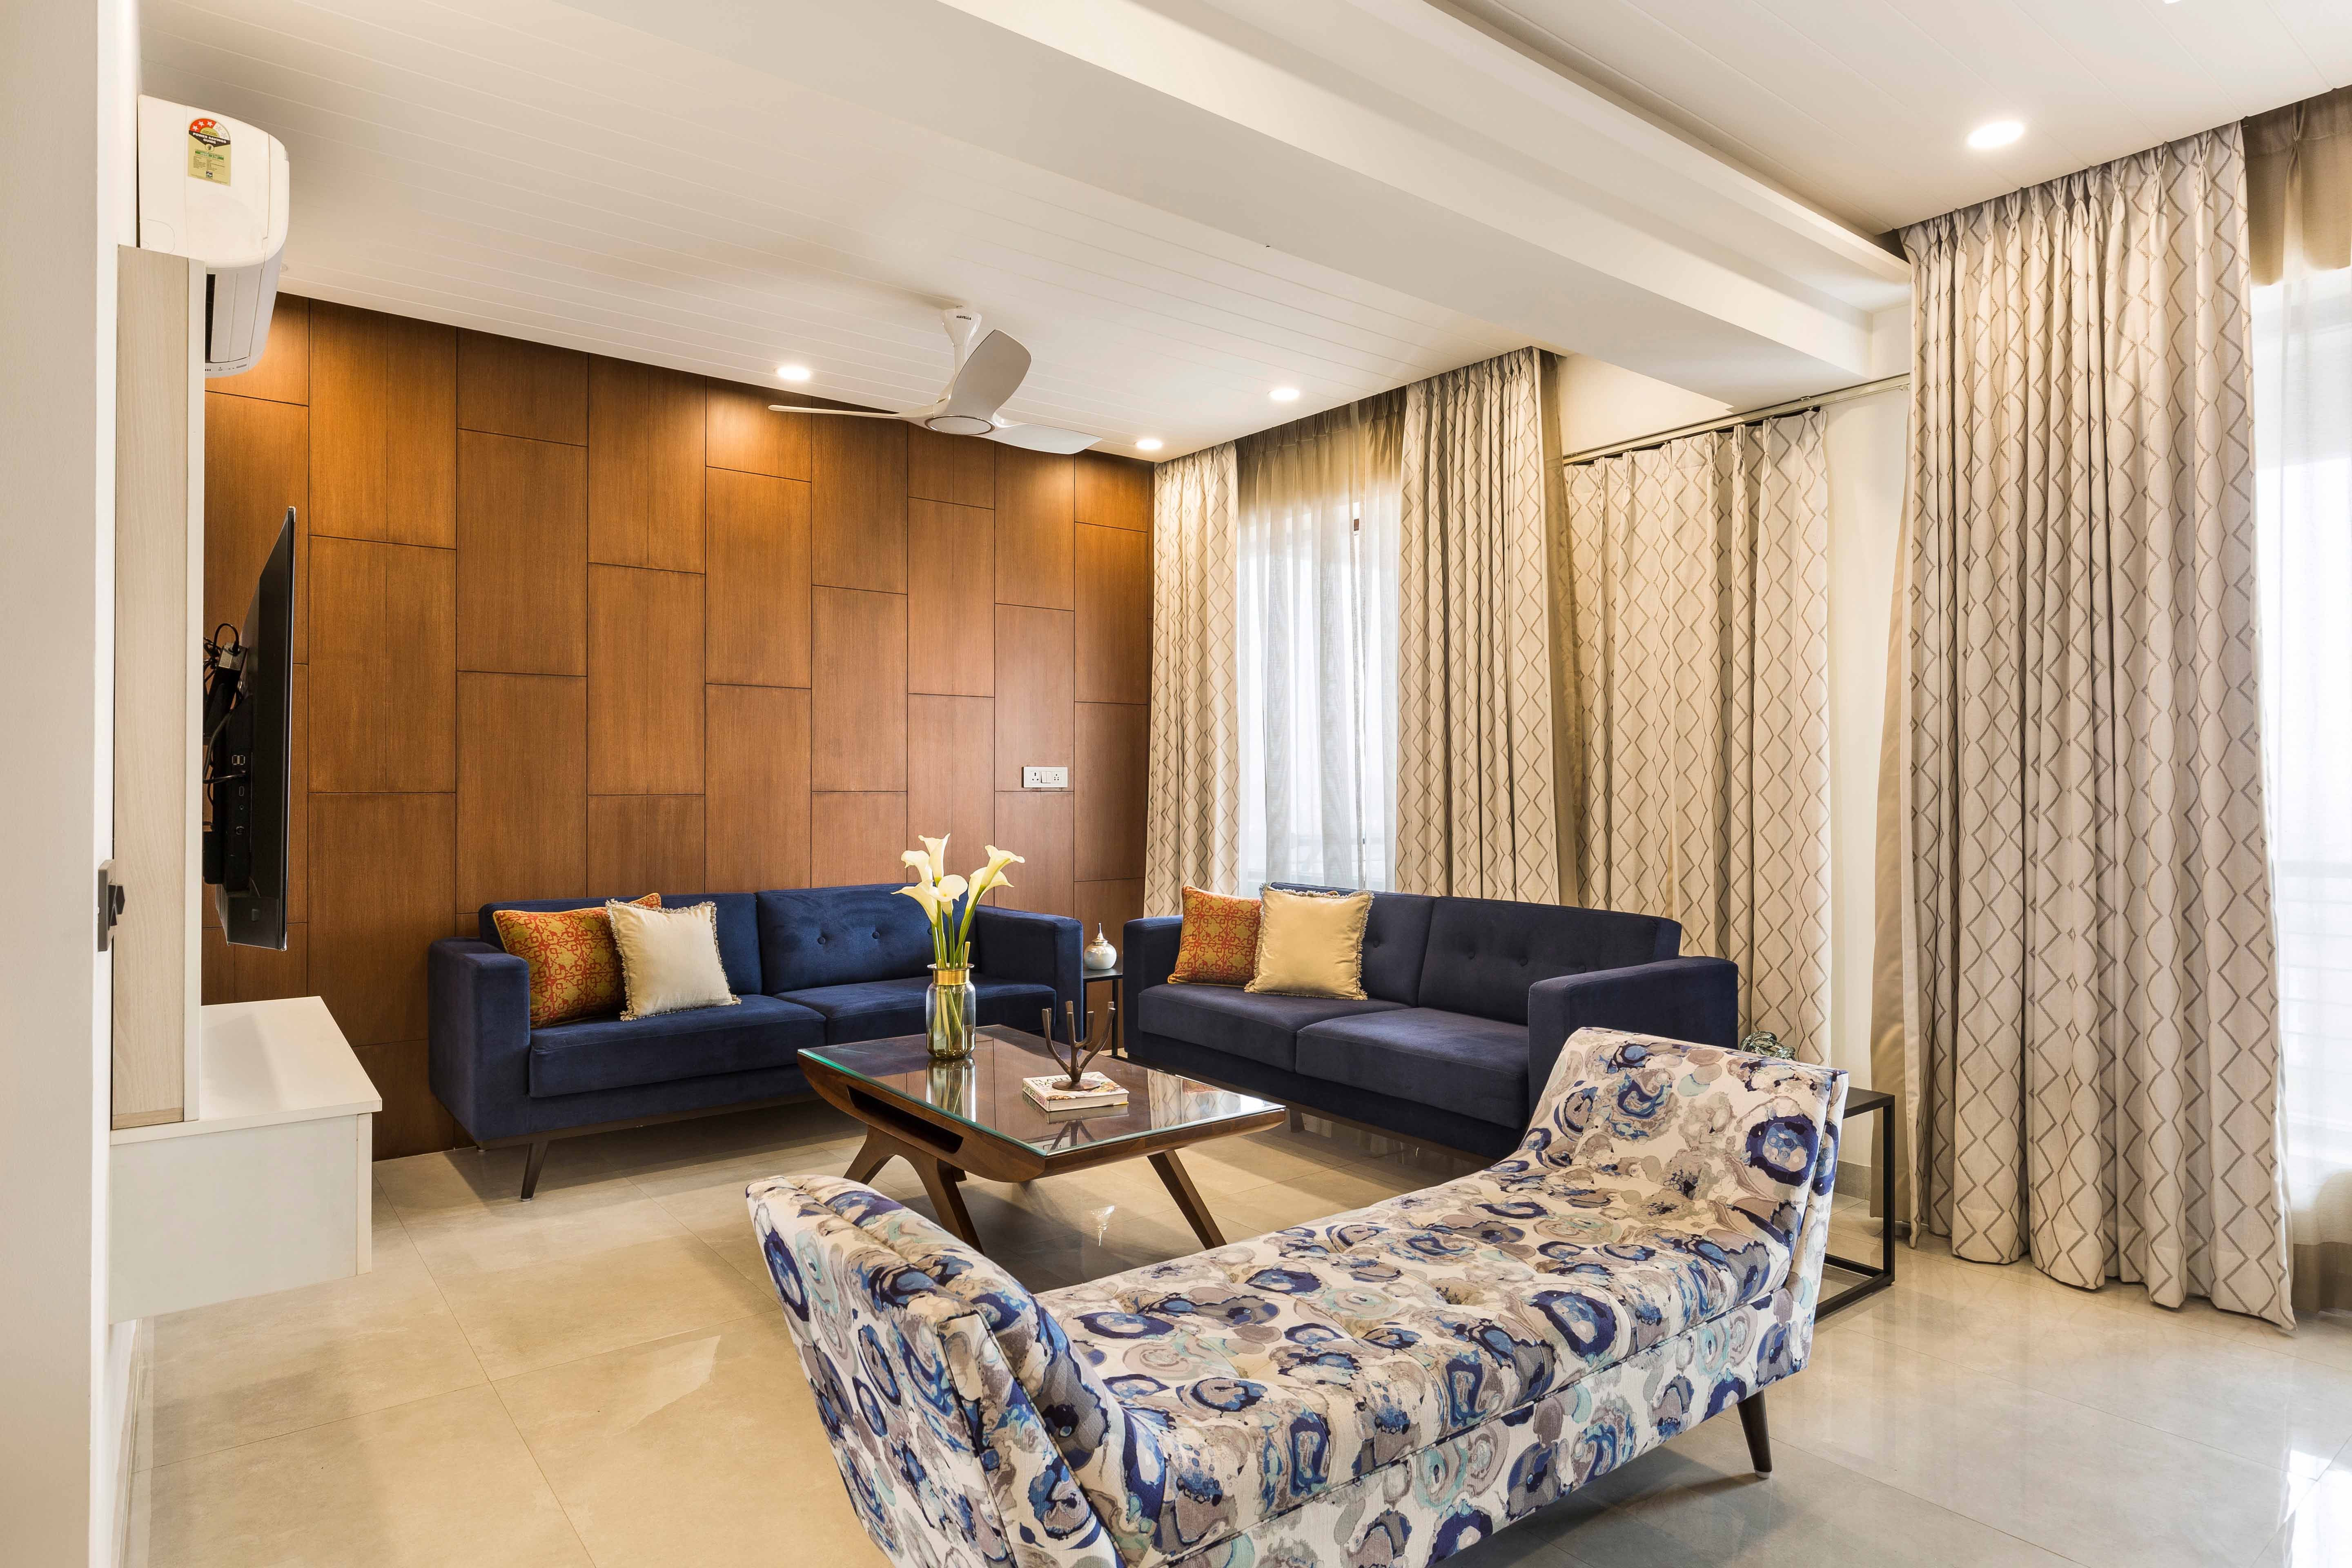 Modern Living Room Design With U-Shaped Navy Blue And White Sofa Set